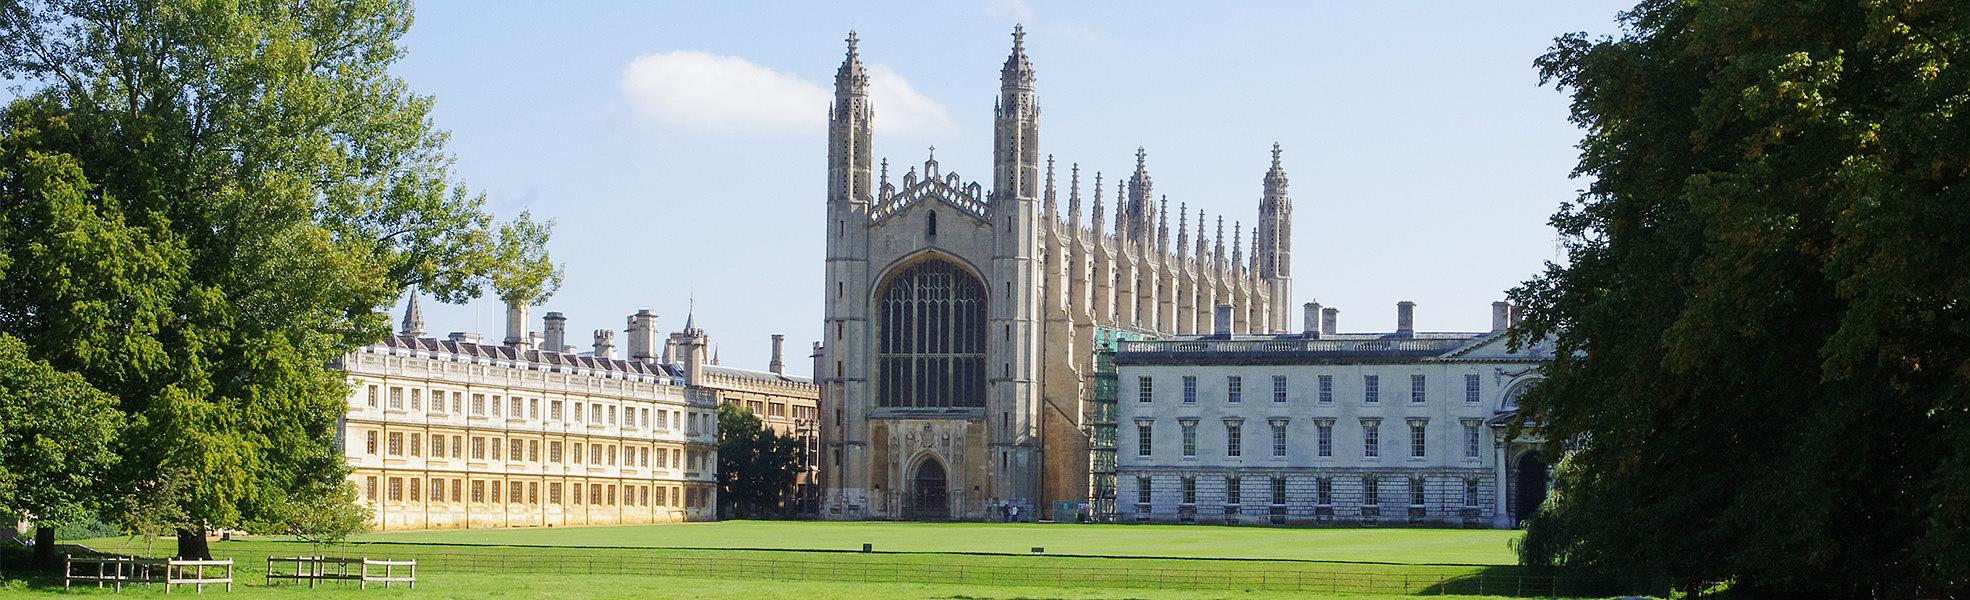 King's College-Cambridge